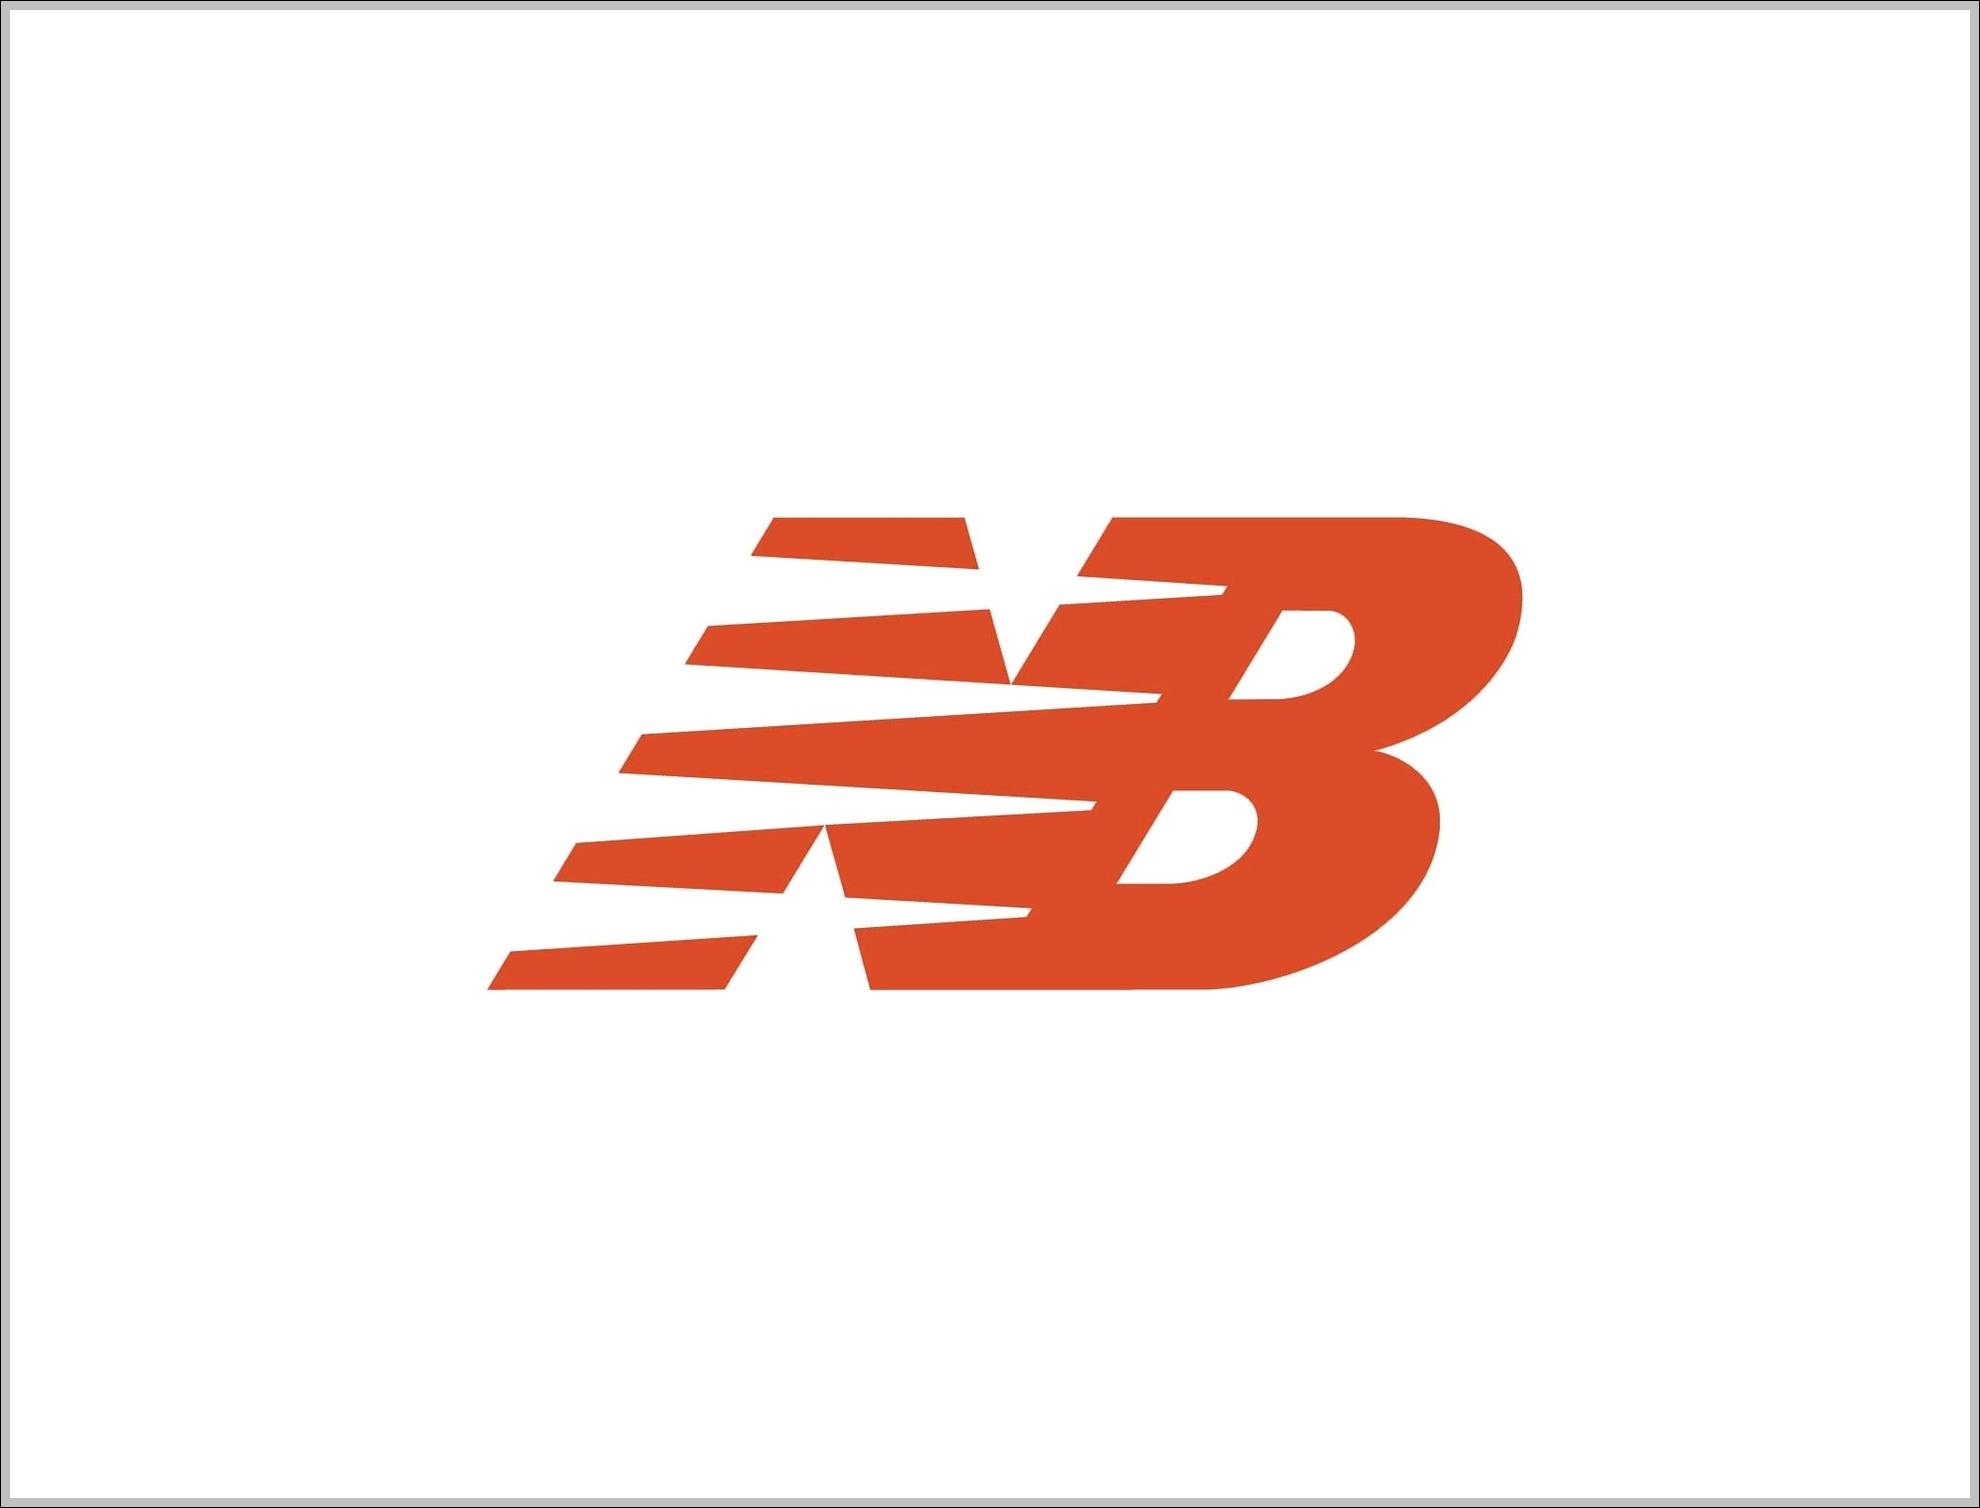 NB Logo - New Balance NB logo | Logo Sign - Logos, Signs, Symbols, Trademarks ...